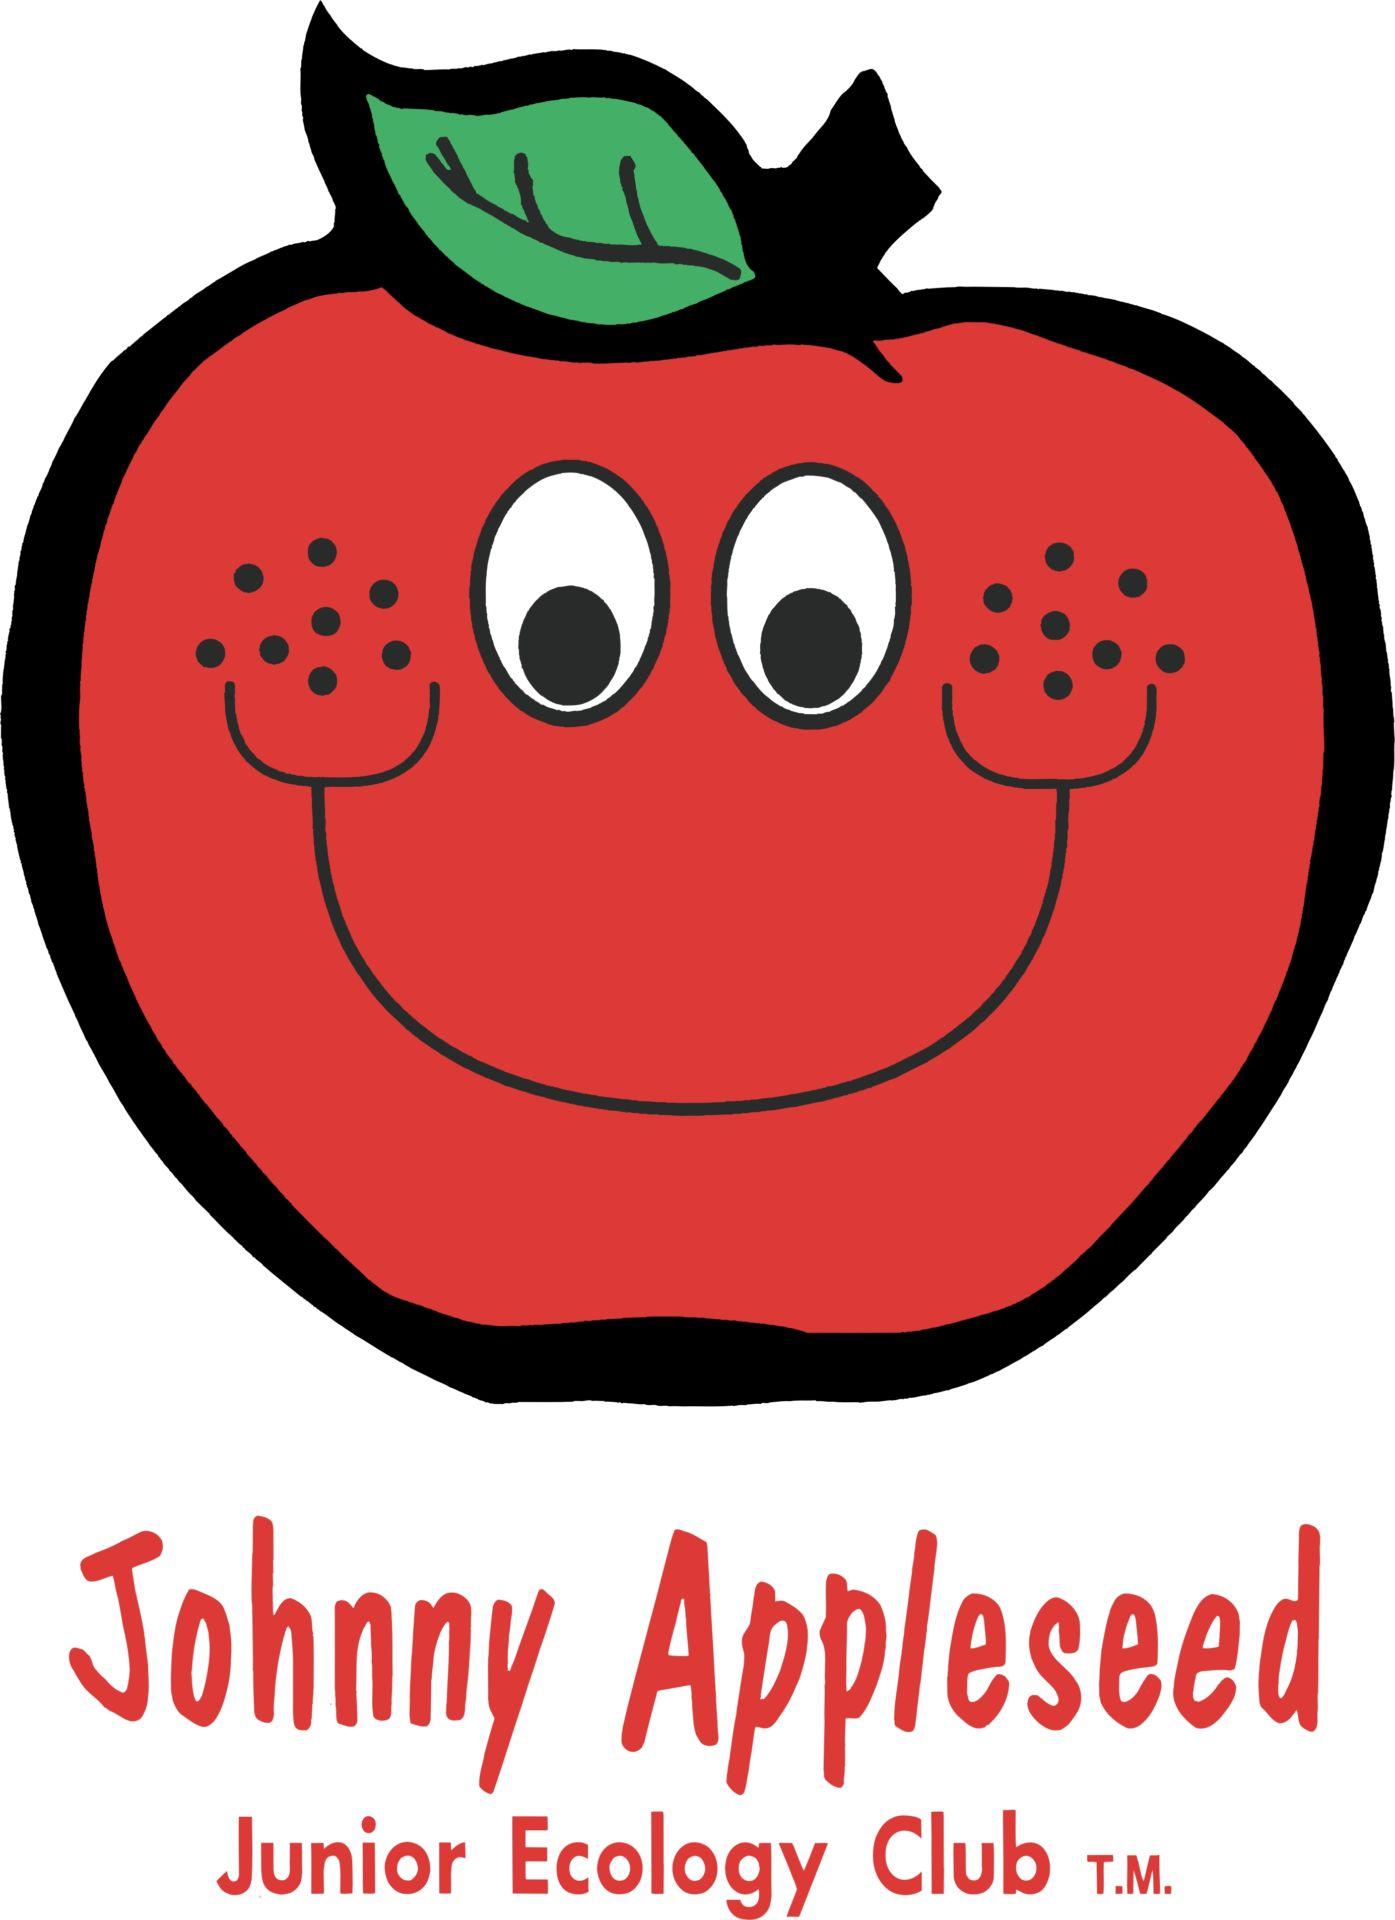 Johnny Appleseed Logo - Johnny Appleseed Jr. Ecology Club T.M. logo Community